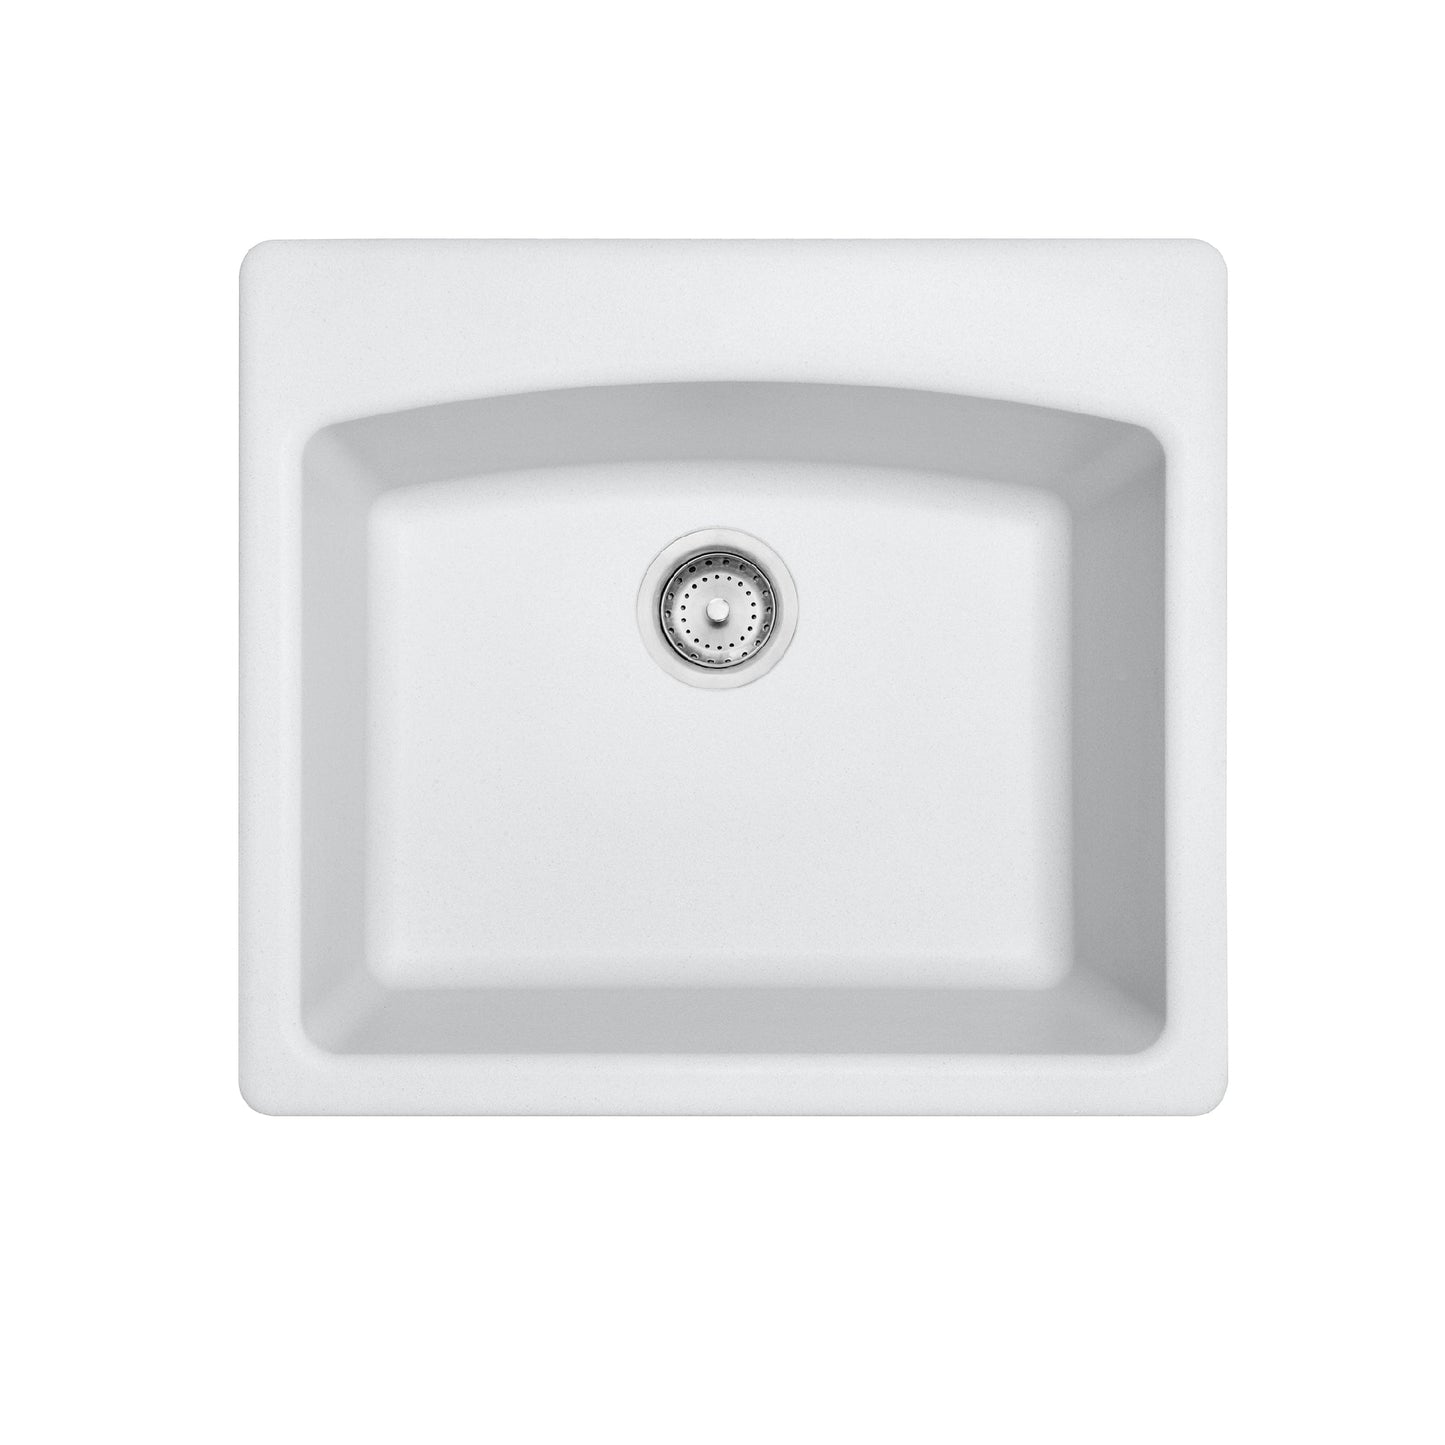 Franke Ellipse 25.0-in. x 22.0-in. Granite Dual Mount Single Bowl Kitchen Sink - ES25229-1